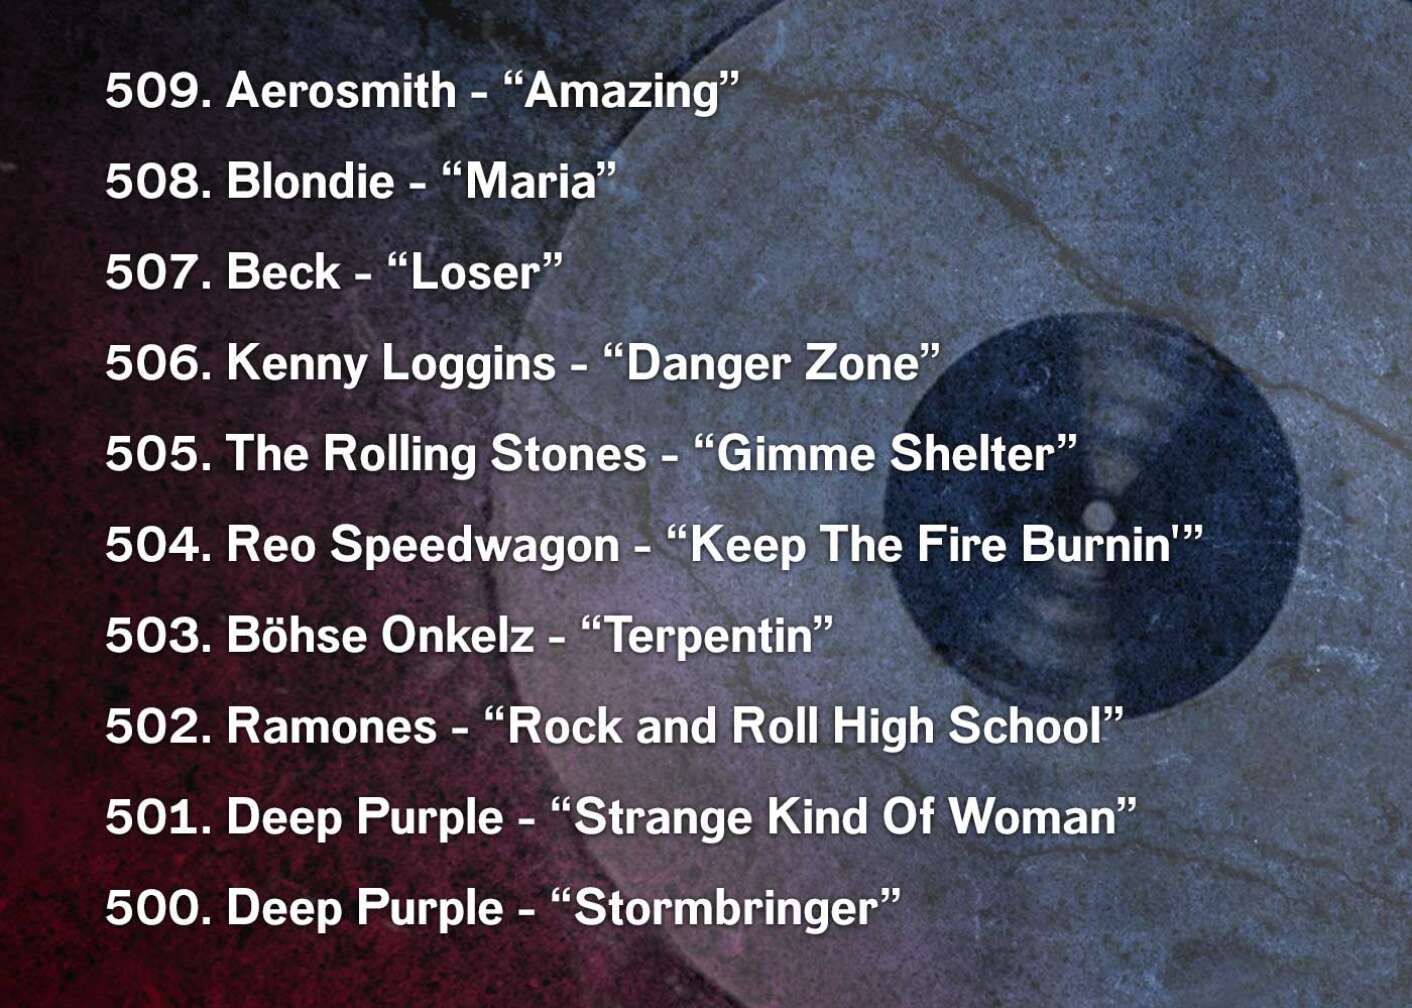 509. Aerosmith - “Amazing” 508. Blondie - “Maria” 507. Beck - “Loser” 506. Kenny Loggins - “Danger Zone” 505. The Rolling Stones - “Gimme Shelter” 504. Reo Speedwagon - “Keep The Fire Burnin'” 503. Böhse Onkelz - “Terpentin” 502. Ramones - “Rock and Roll High School” 501. Deep Purple - “Strange Kind Of Woman” 500. Deep Purple - “Stormbringer”